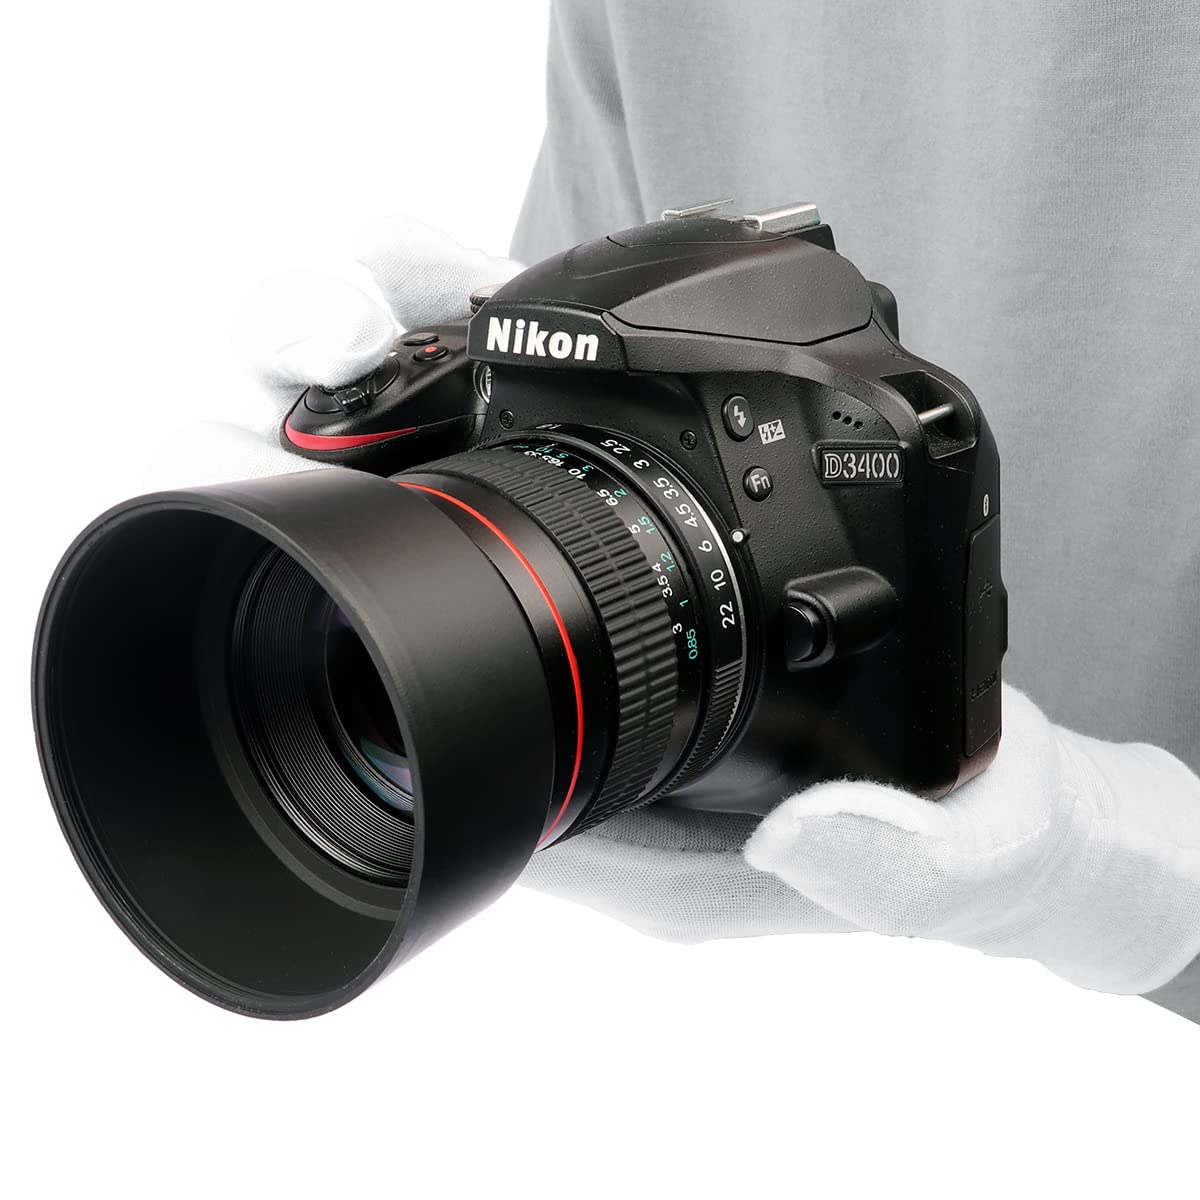 Lightdow 85mm F1.8 Medium Telephoto Manual Focus Full Frame Portrait Lens for Nikon D7500 D7200 D5600 D5500 D5300 D5200 D5100 D3500 D3400 D3300 D3200 D850 D810 D800 D750 D610 D500 D60 D6 D5 D4 etc